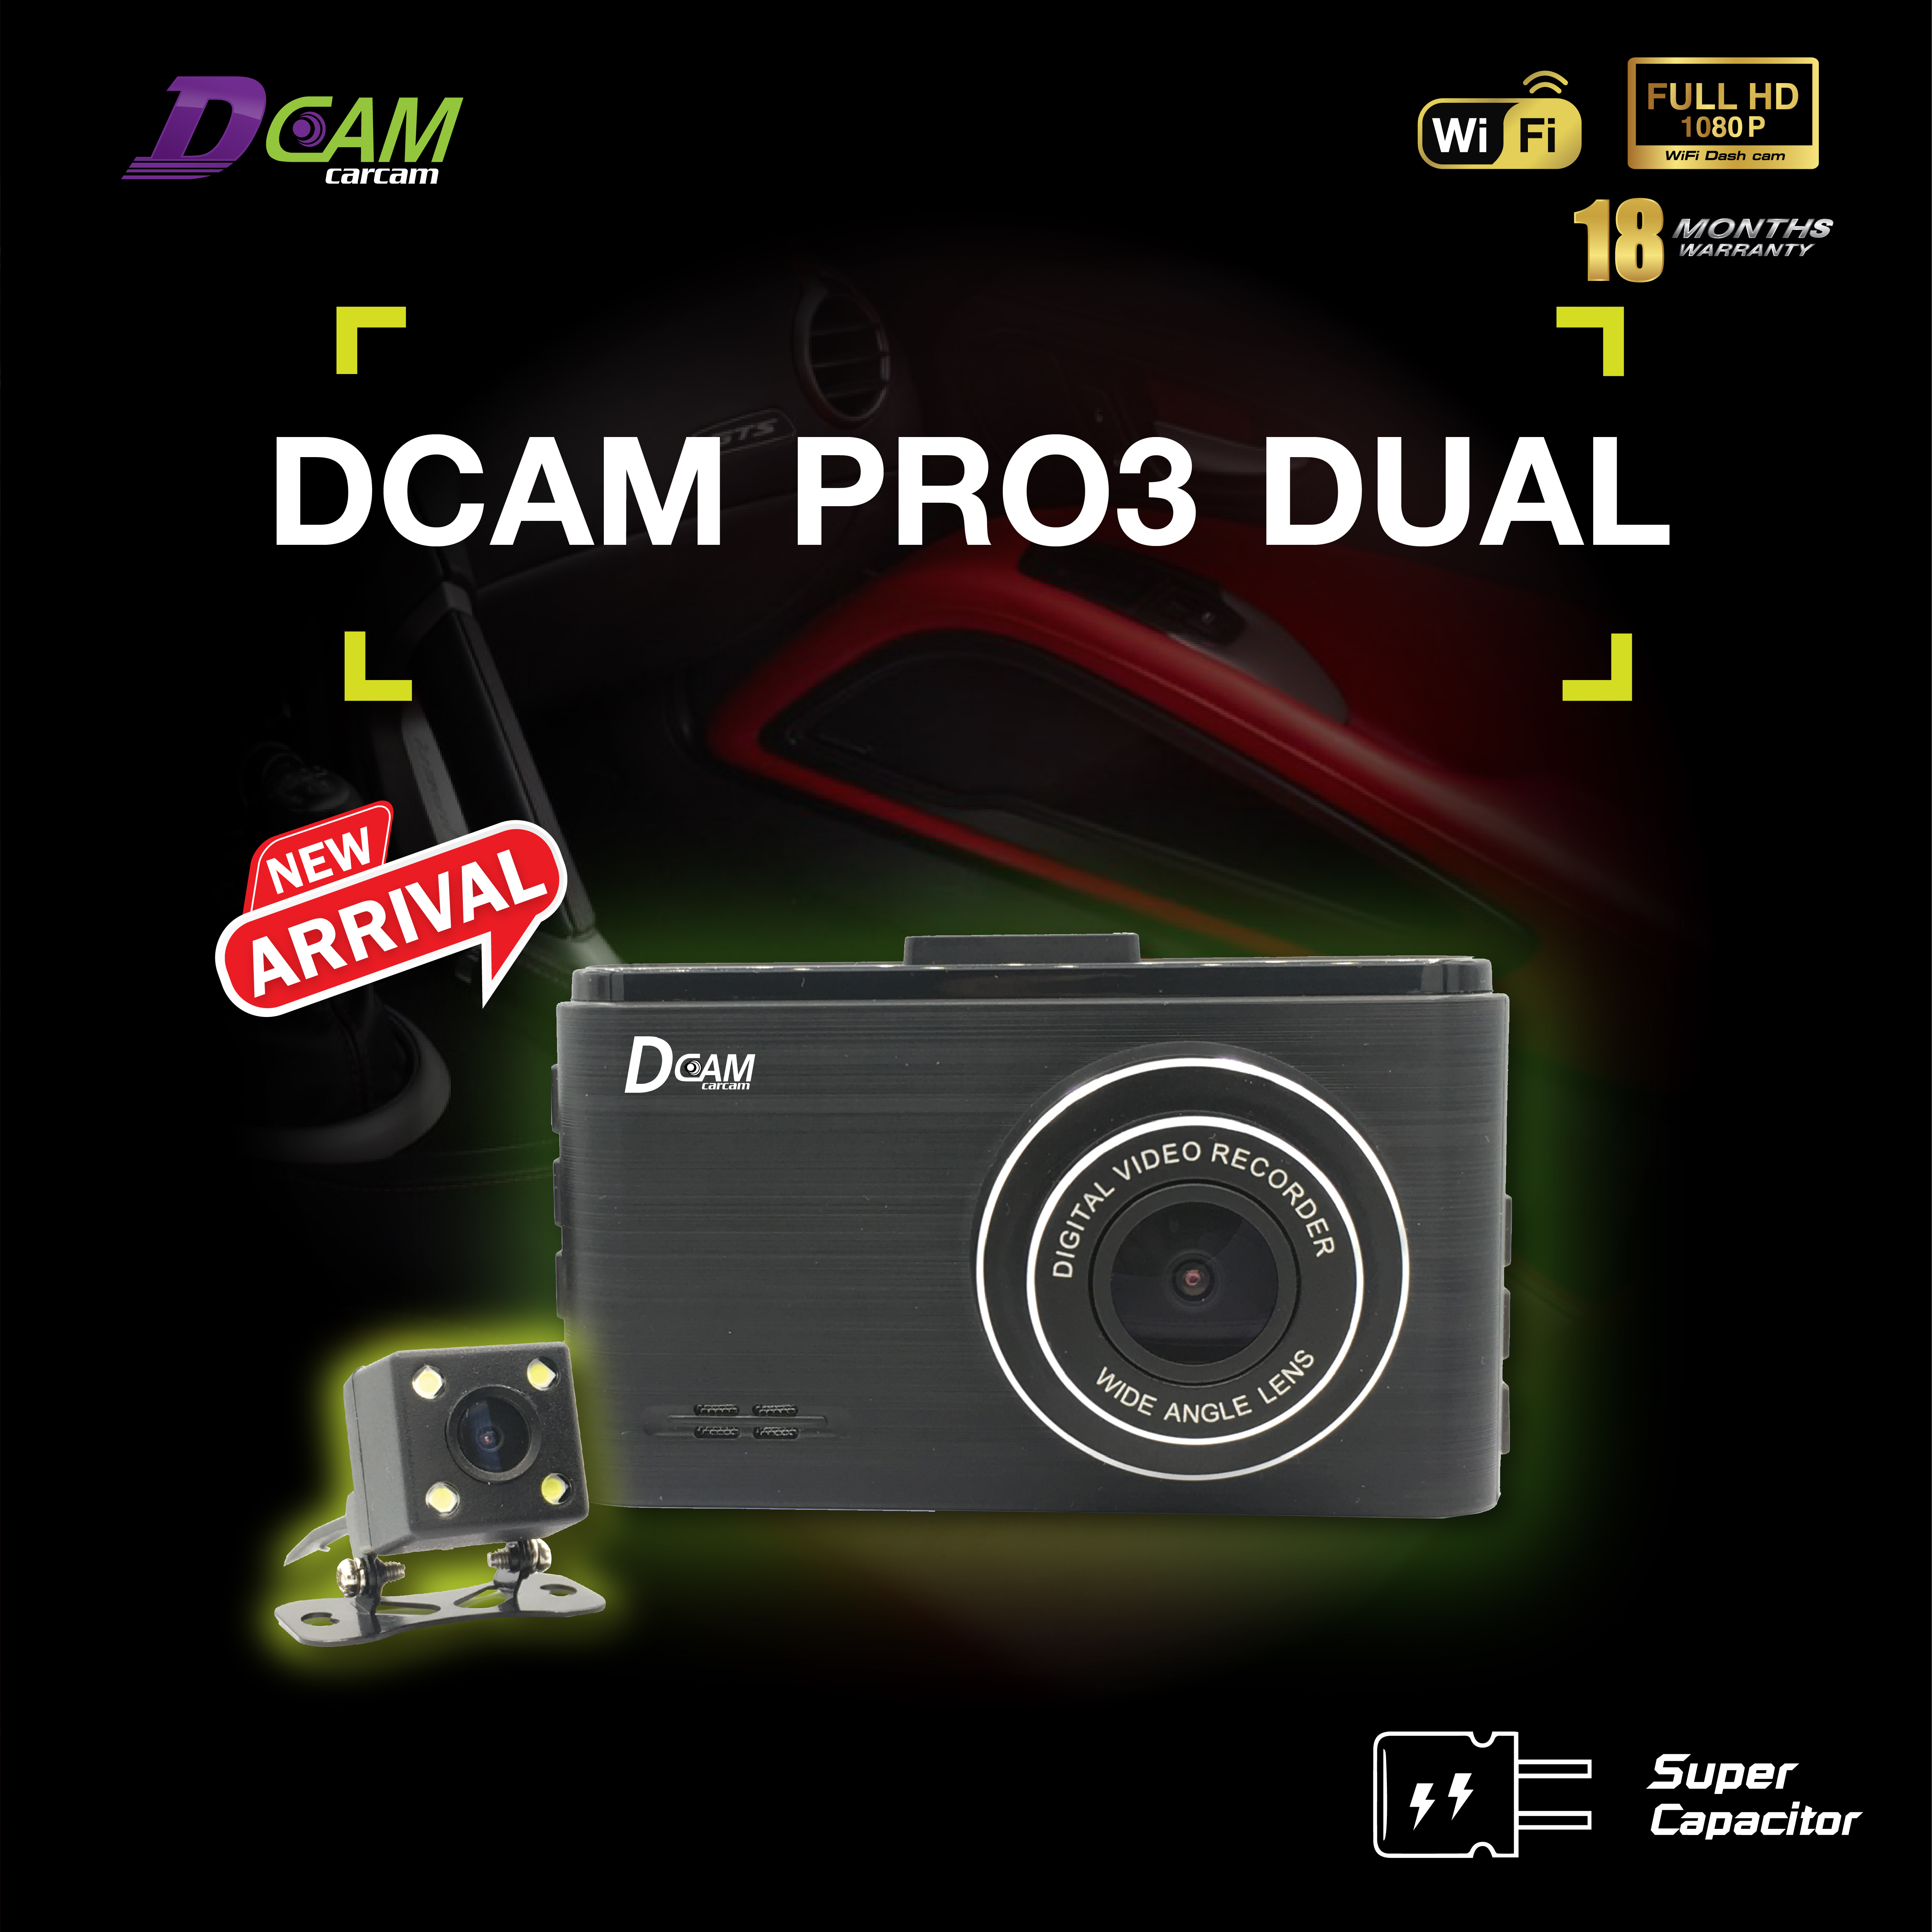 Dcam Pro 3 Dual For Web 02